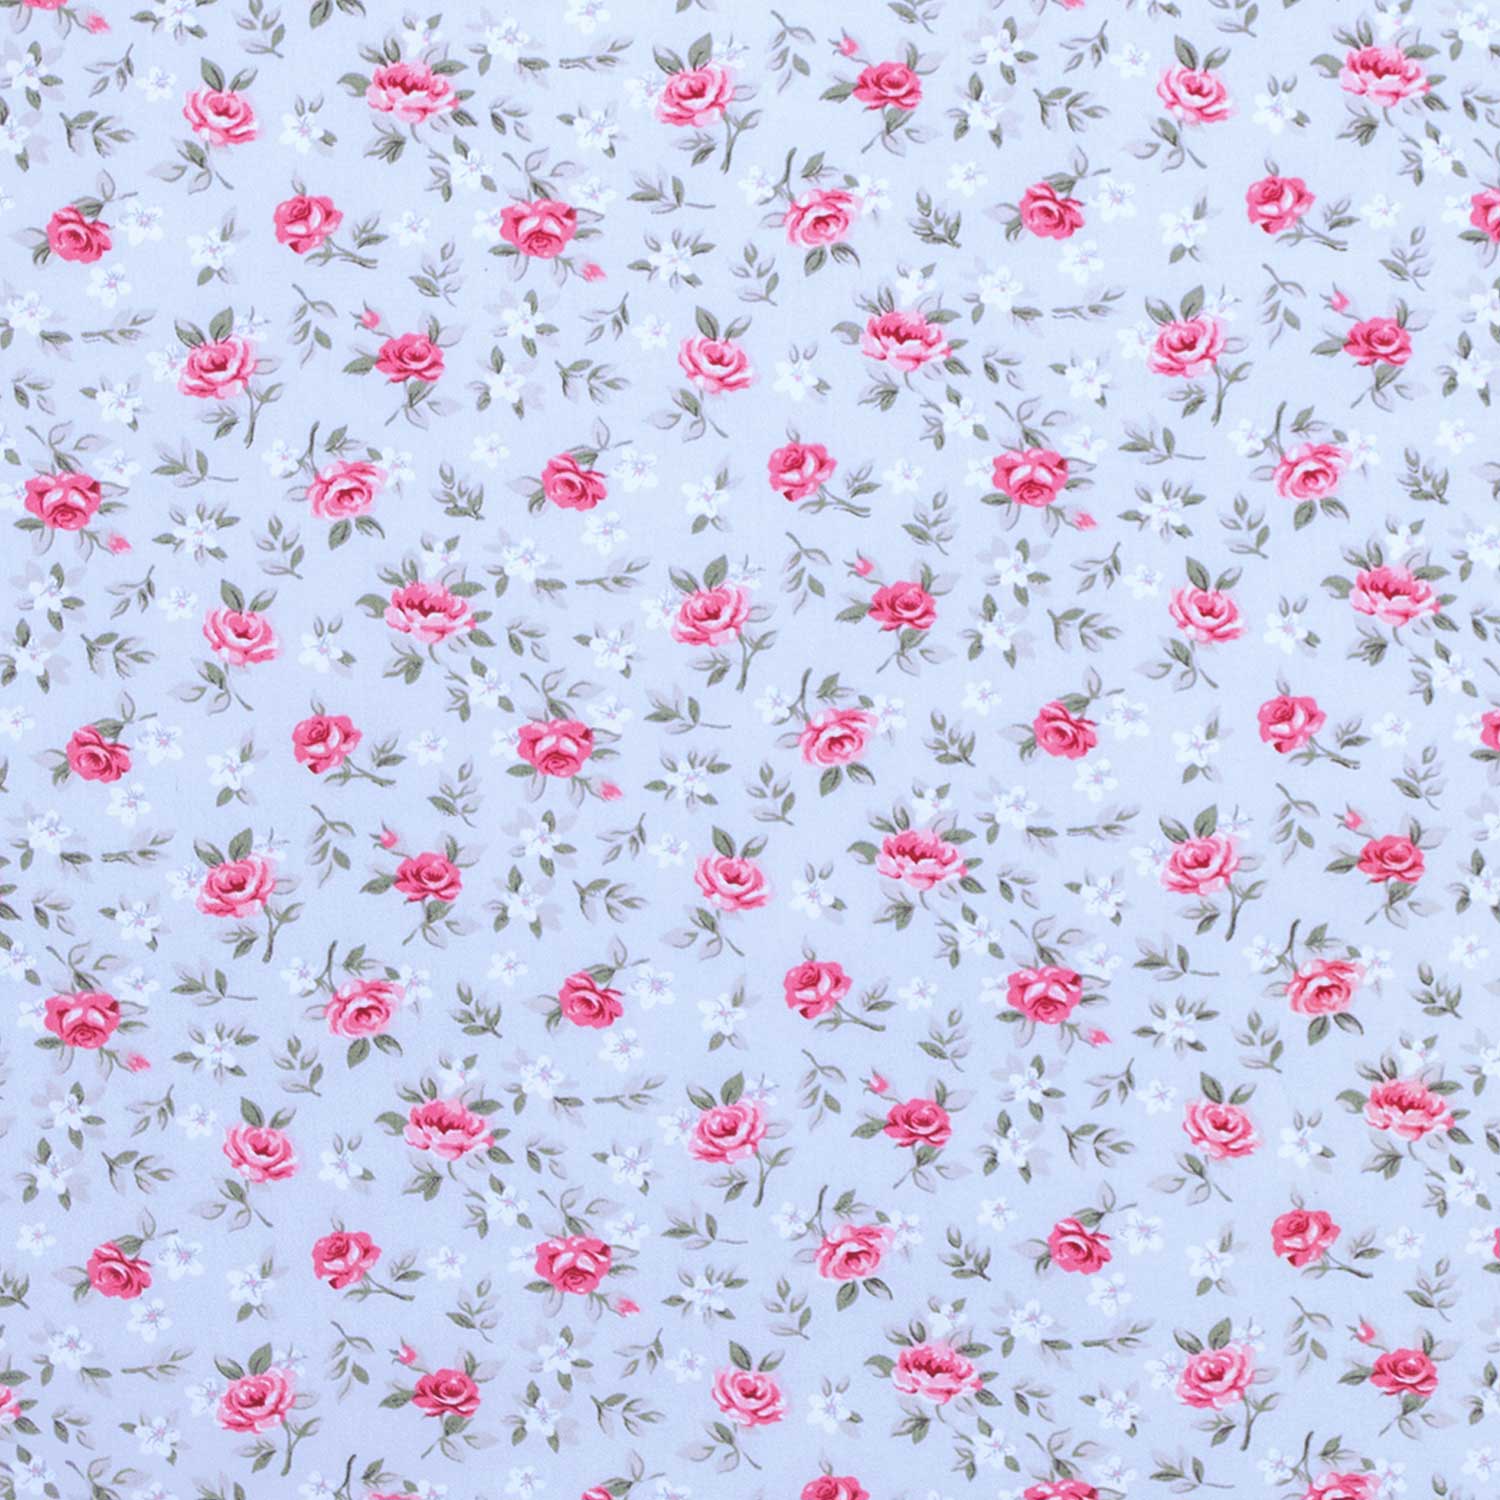 tecido-tricoline-estampado-floral-lucia-cinza-della-aviamentos-tecidos-caldeira-capa-5298